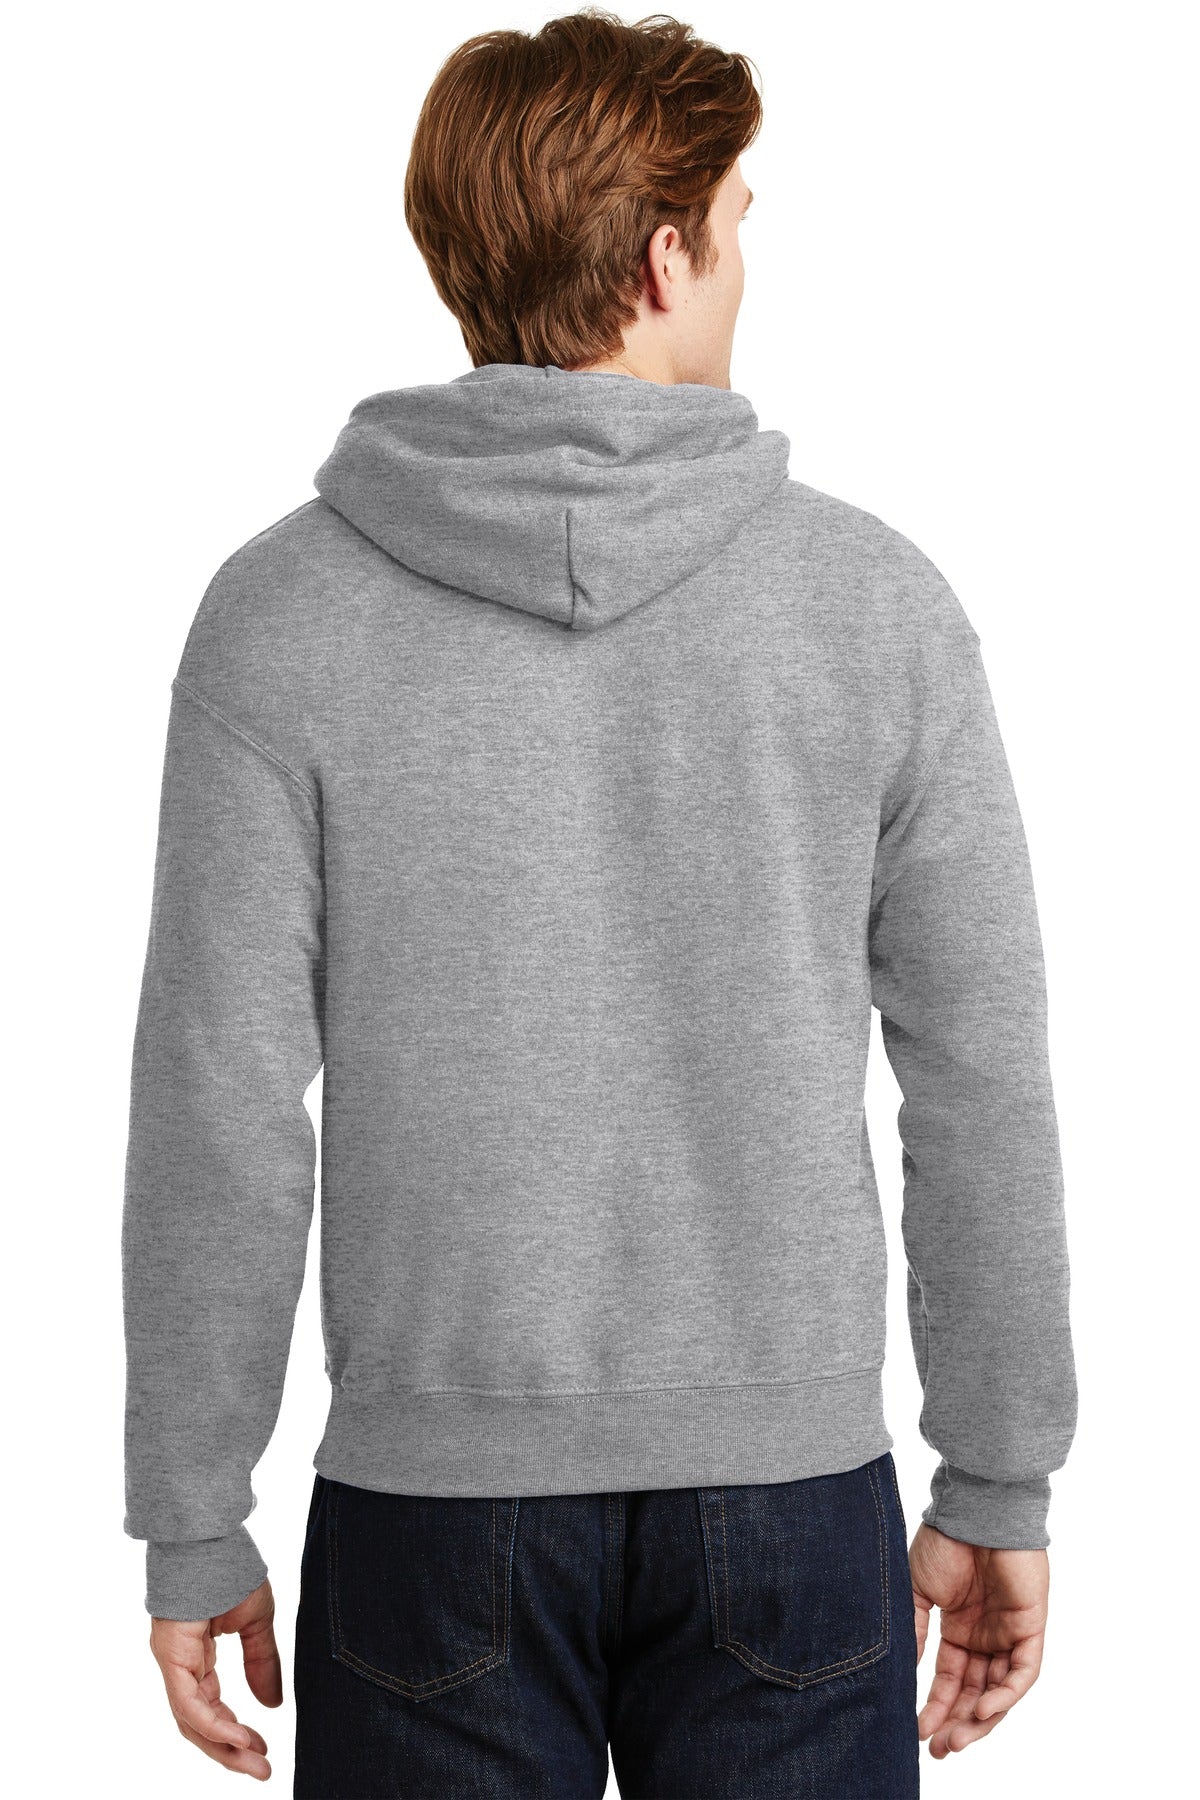 Gildan 18500 Heavyweight Blend Hooded Sweatshirt - From $12.19